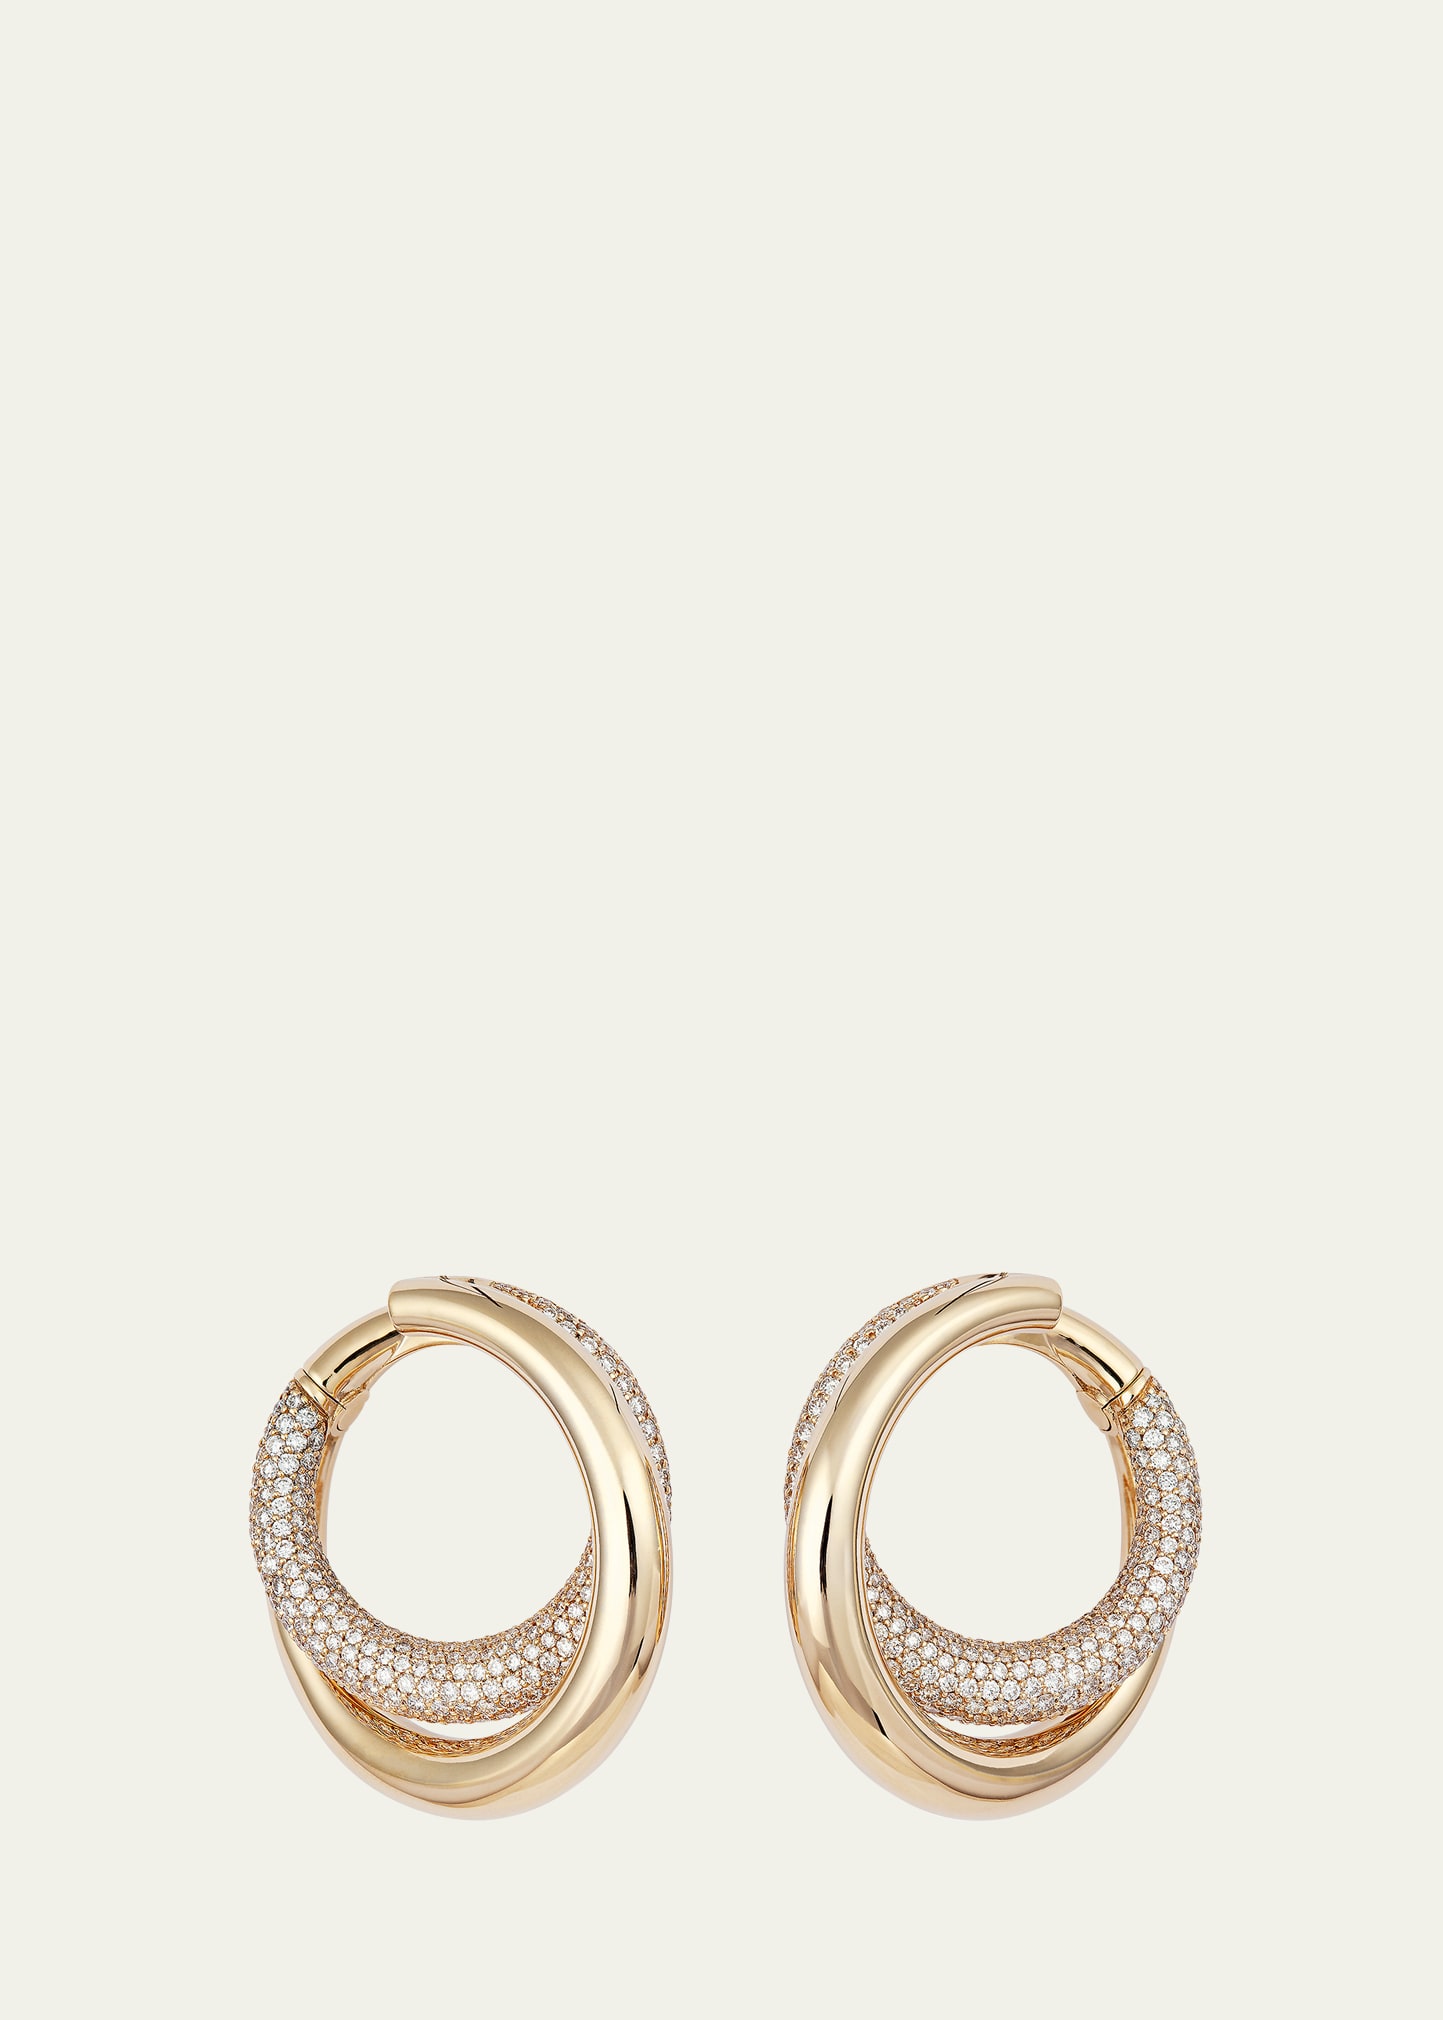 The Loop Earrings - Infinity Loop Half Pavé, Big, in Yellow Gold and White Diamonds